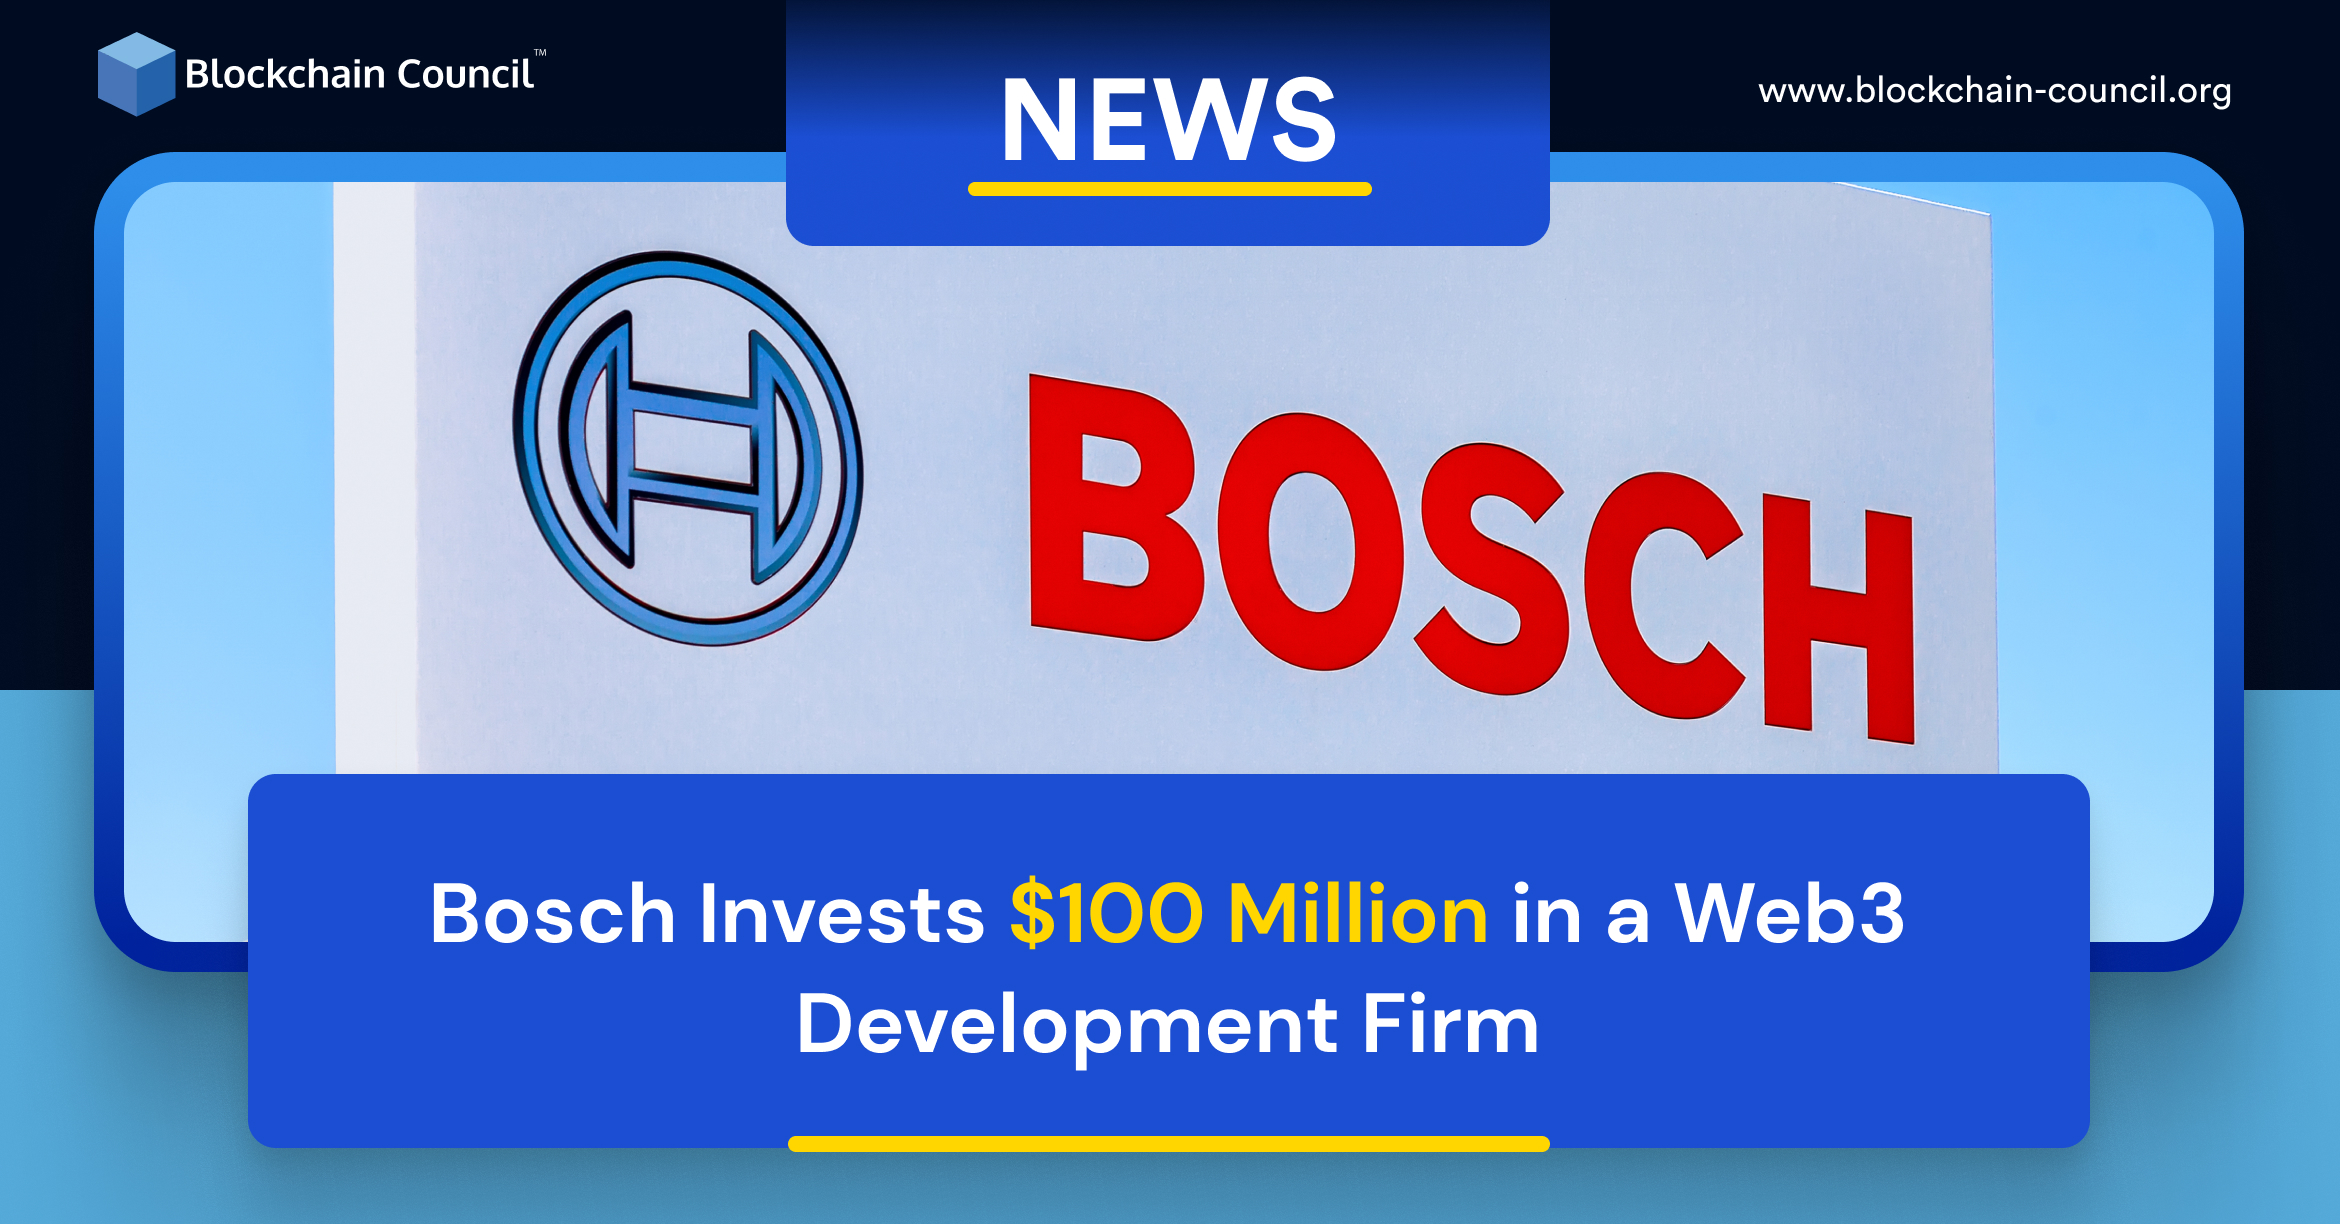 Bosch Invests $100 Million in a Web3 Development Firm